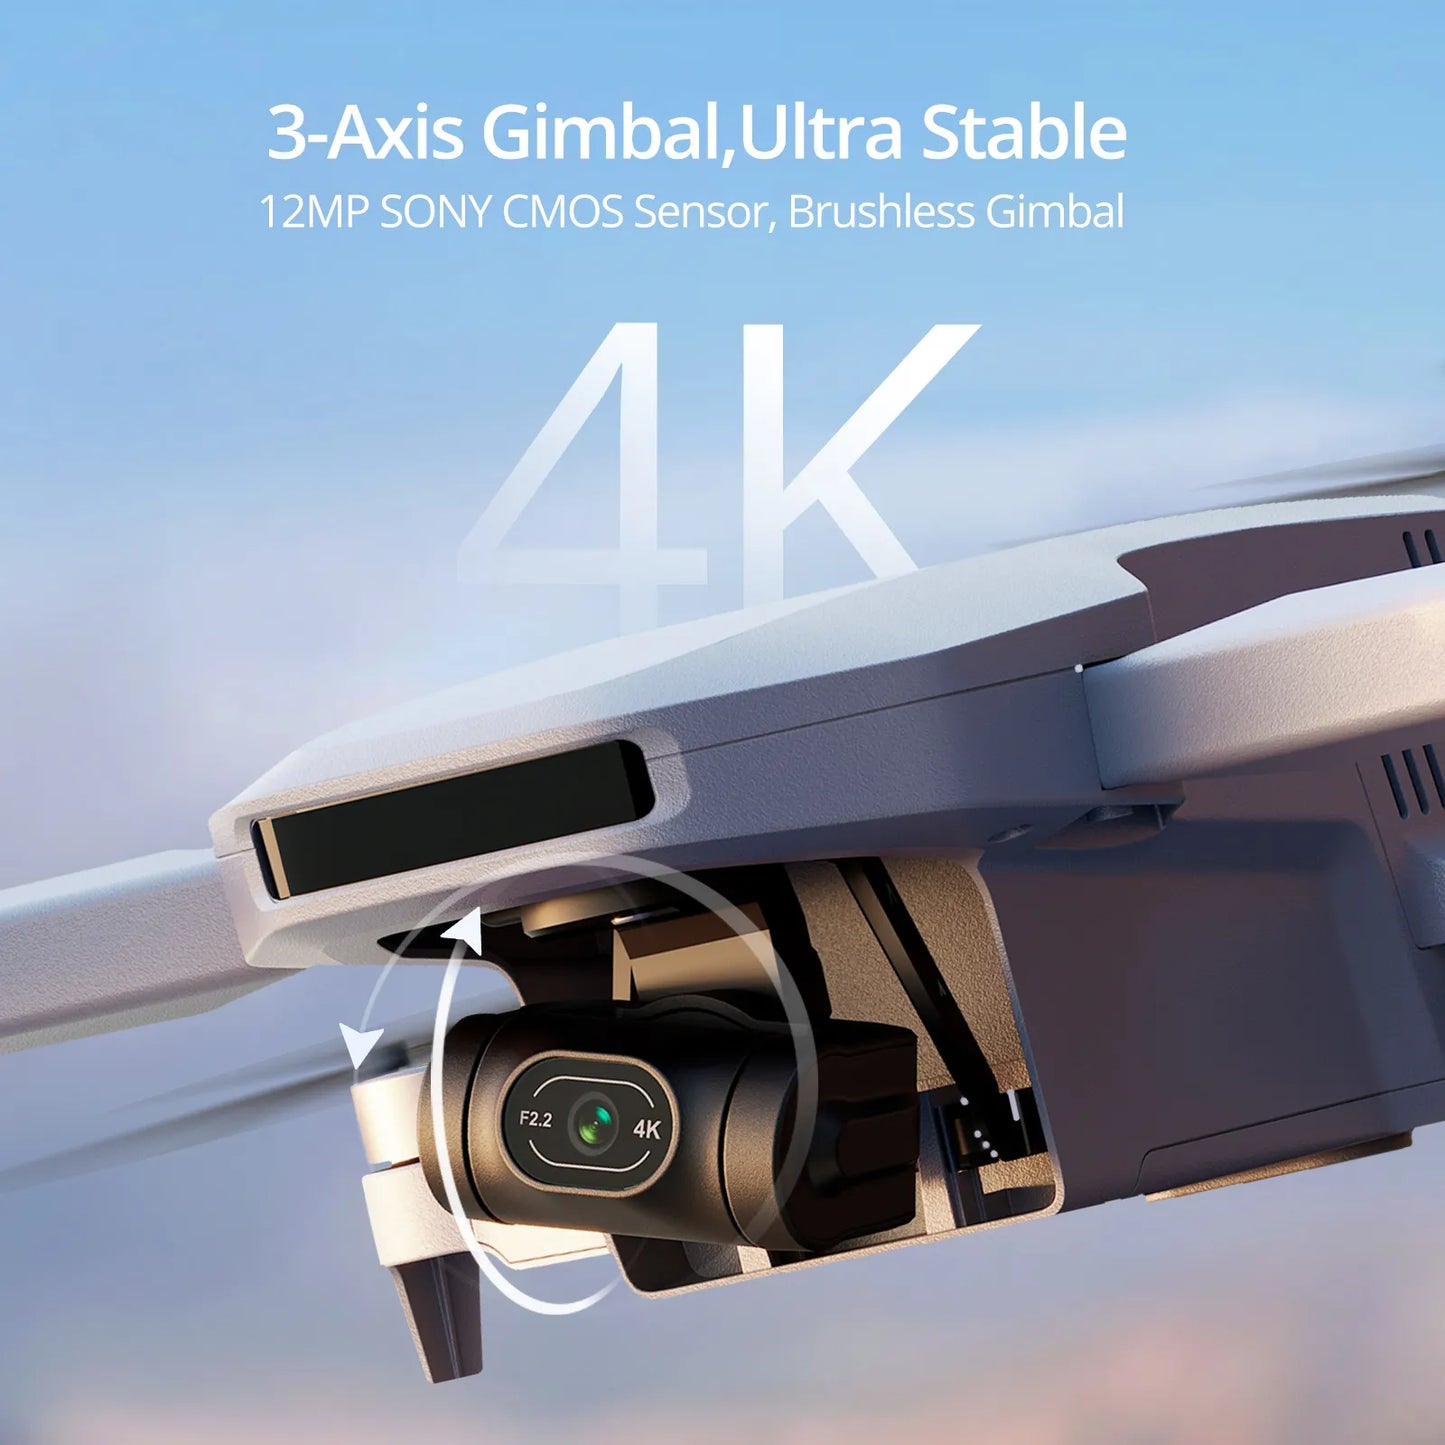 Potensic ATOM: Mini Drone Profesional 4K con Gimbal 3 Ejes, GPS 6KM - Ideal para Viajes